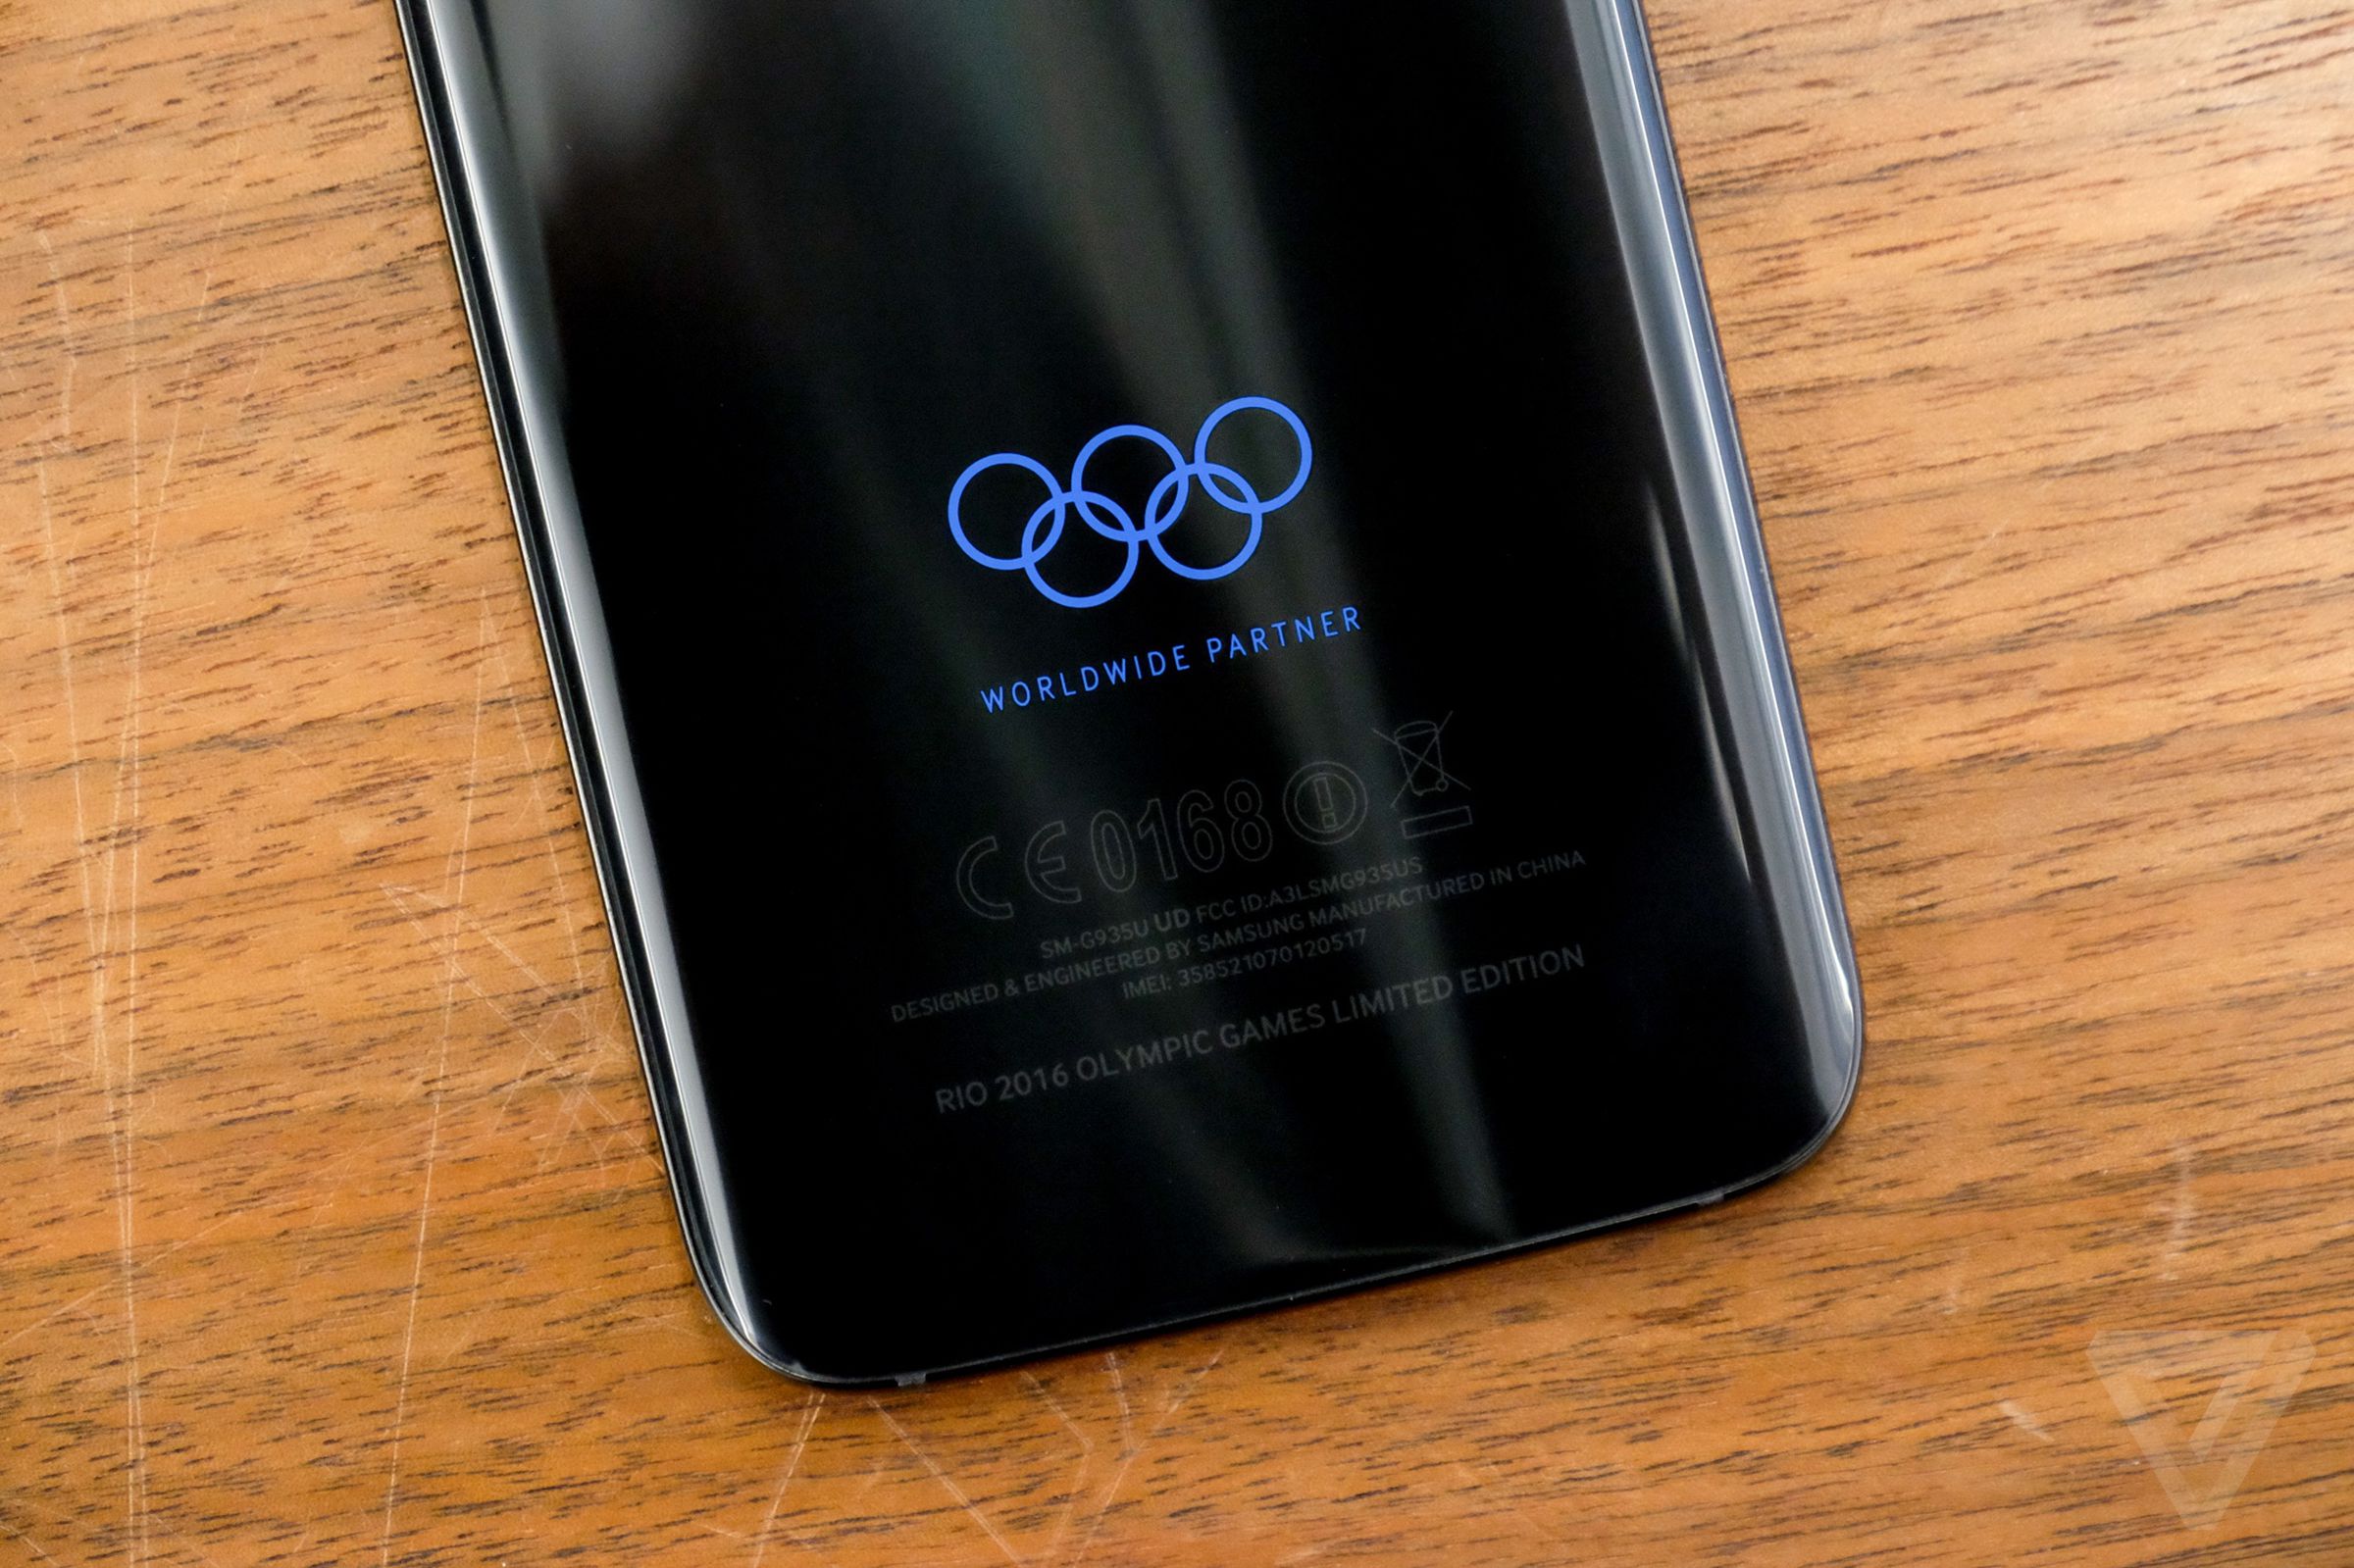 Samsung Galaxy S7 Edge Olympic Games Edition photos